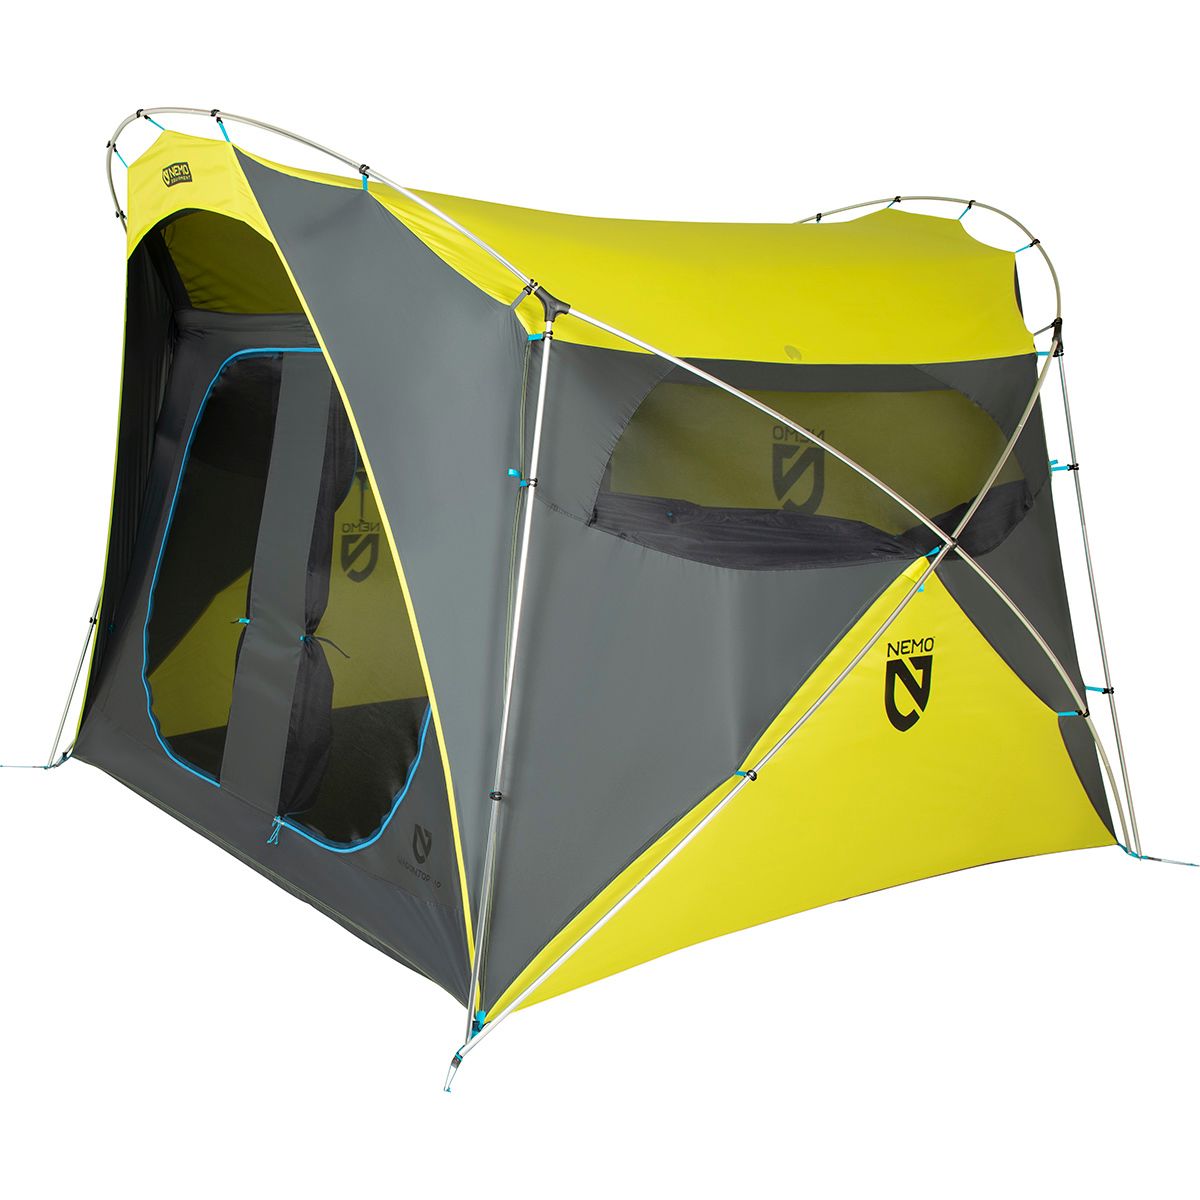 NEMO Equipment Inc. Wagontop 4 Tent: 4-Person 3-Season